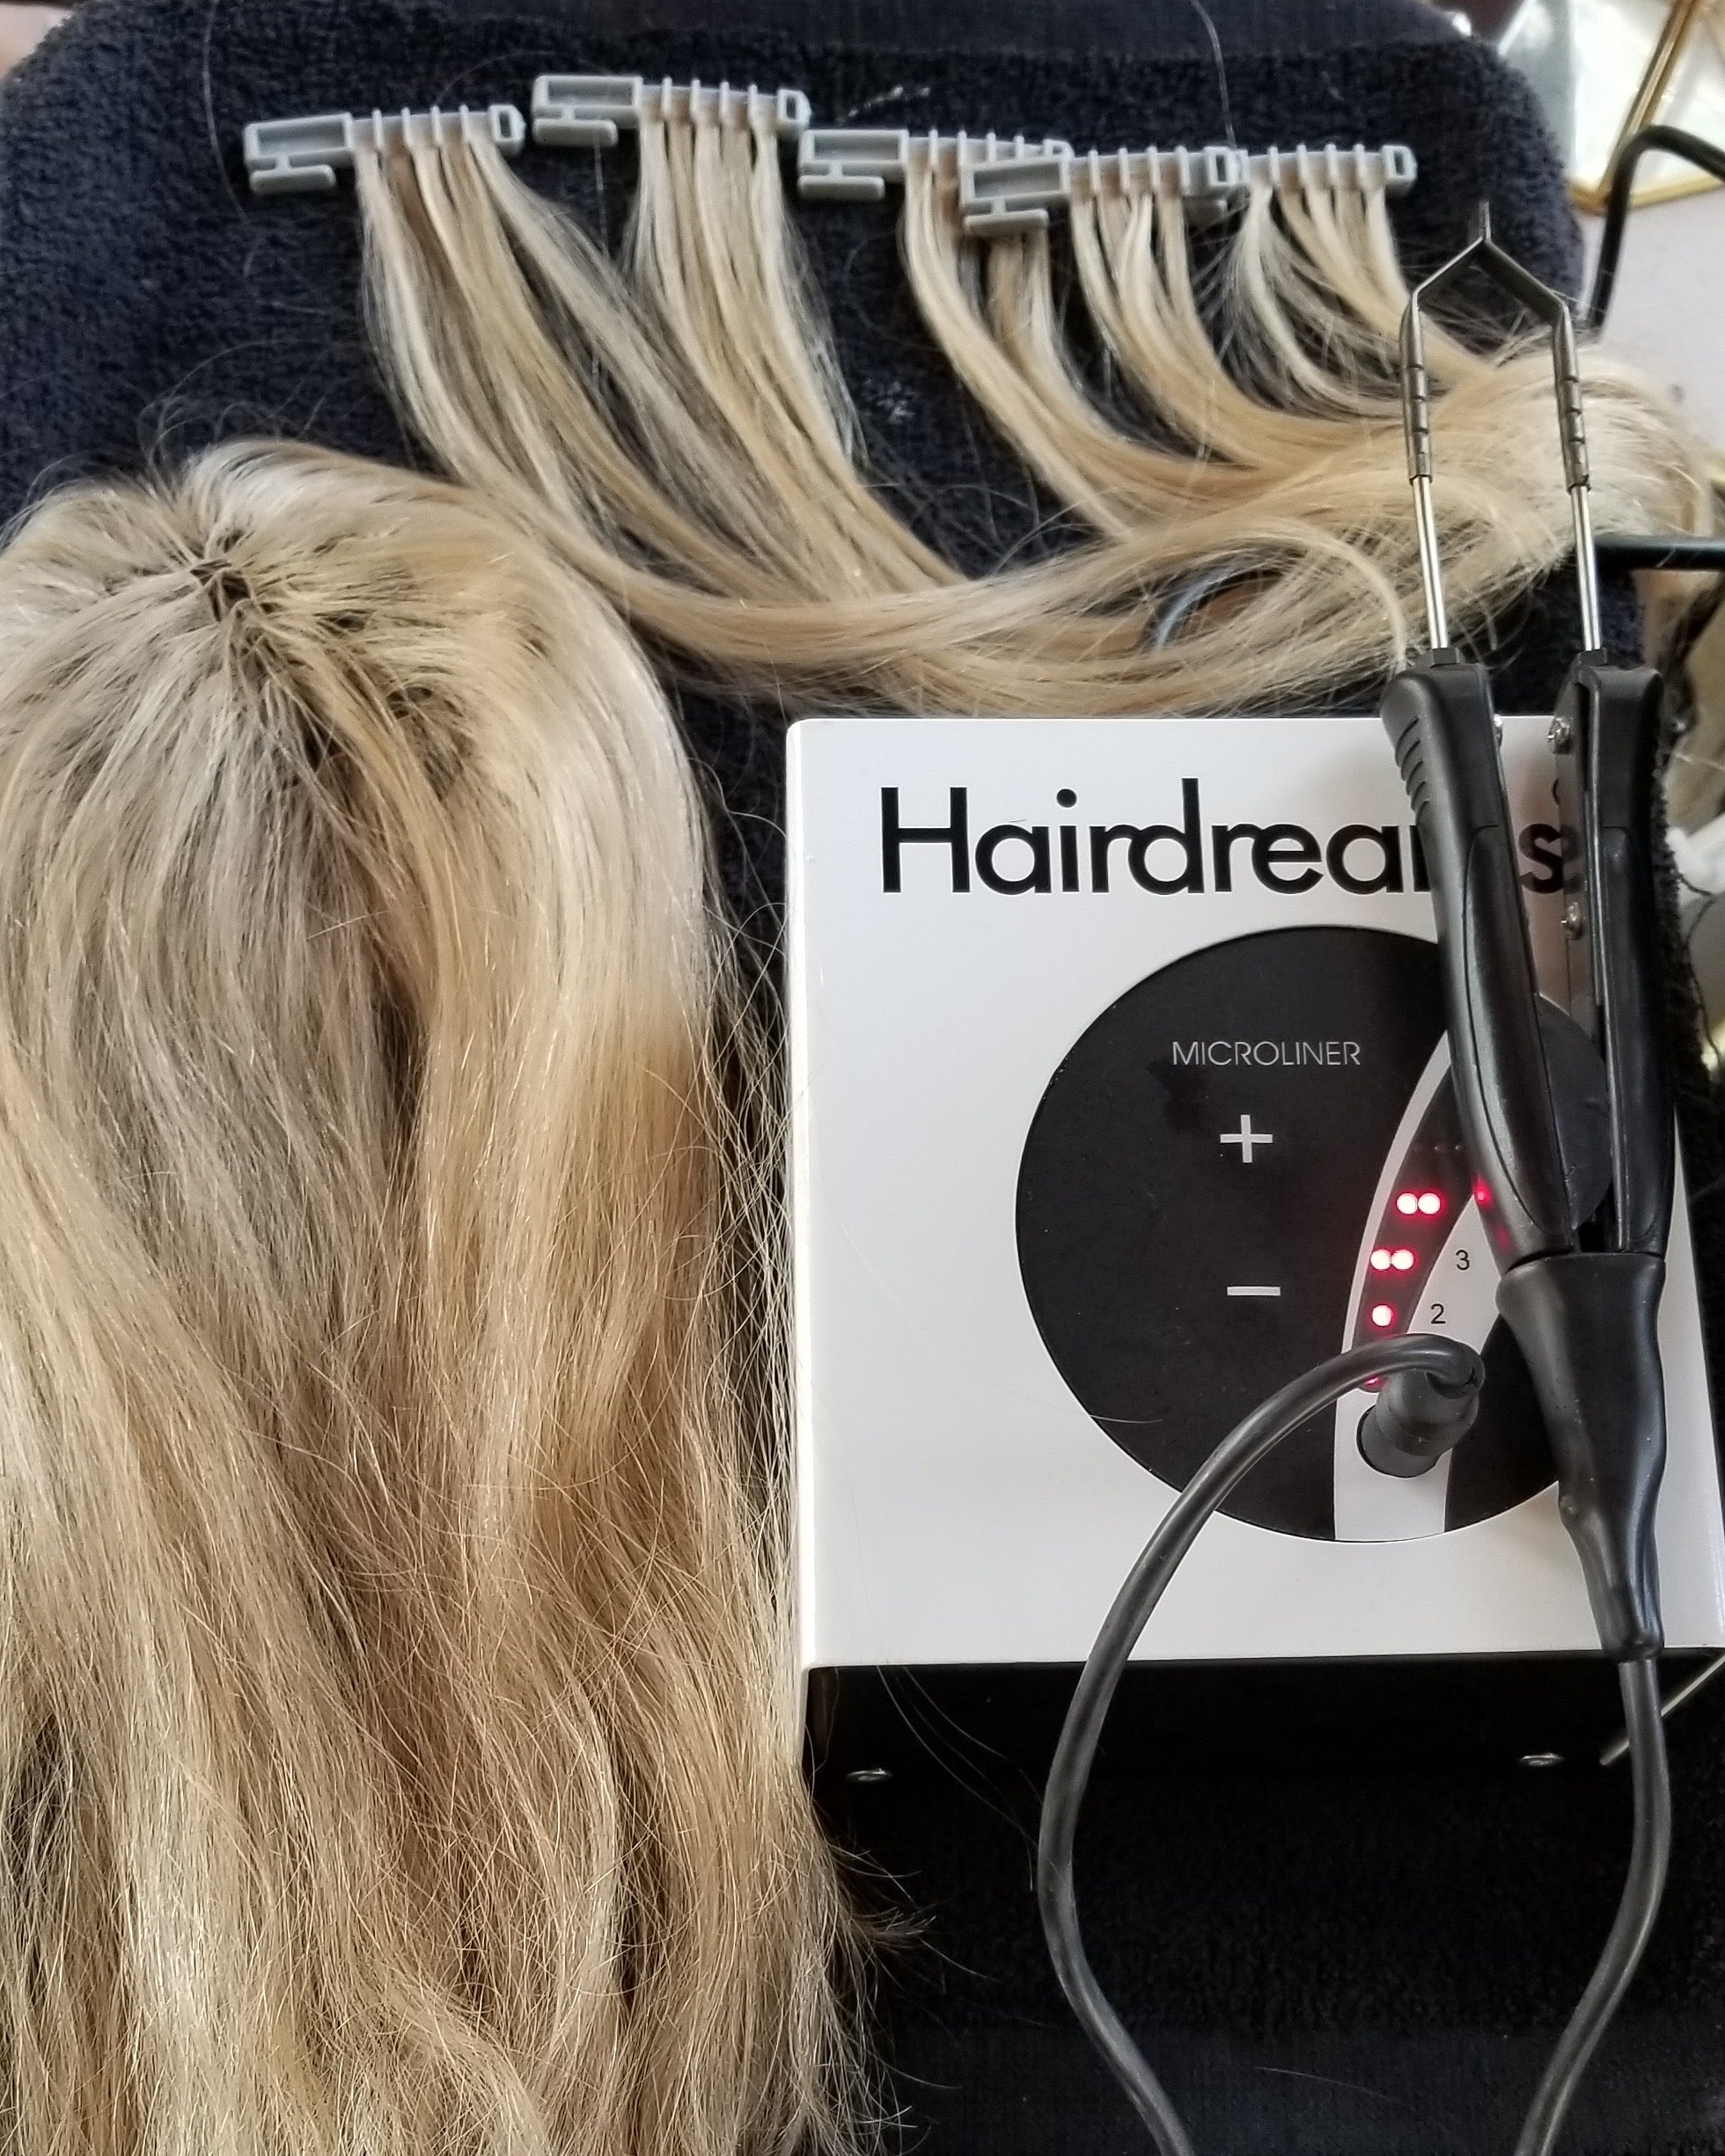 Hair extension system - Laserbeamer NANO - Hairdreams